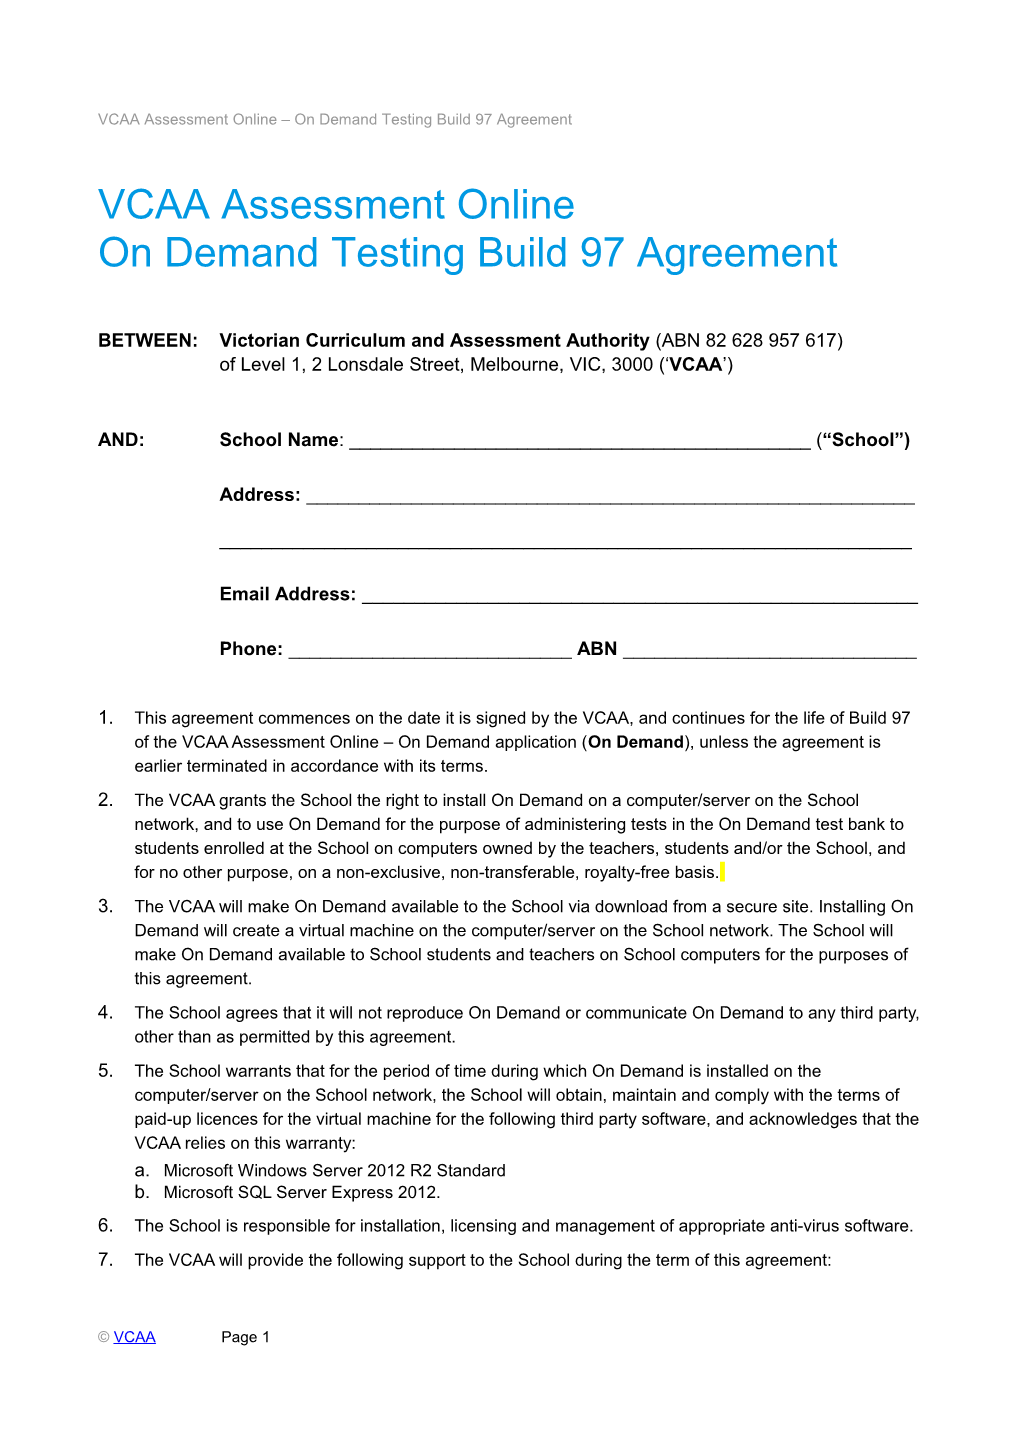 VCAA Assessment Online on Demand Testing Build 97 Agreement